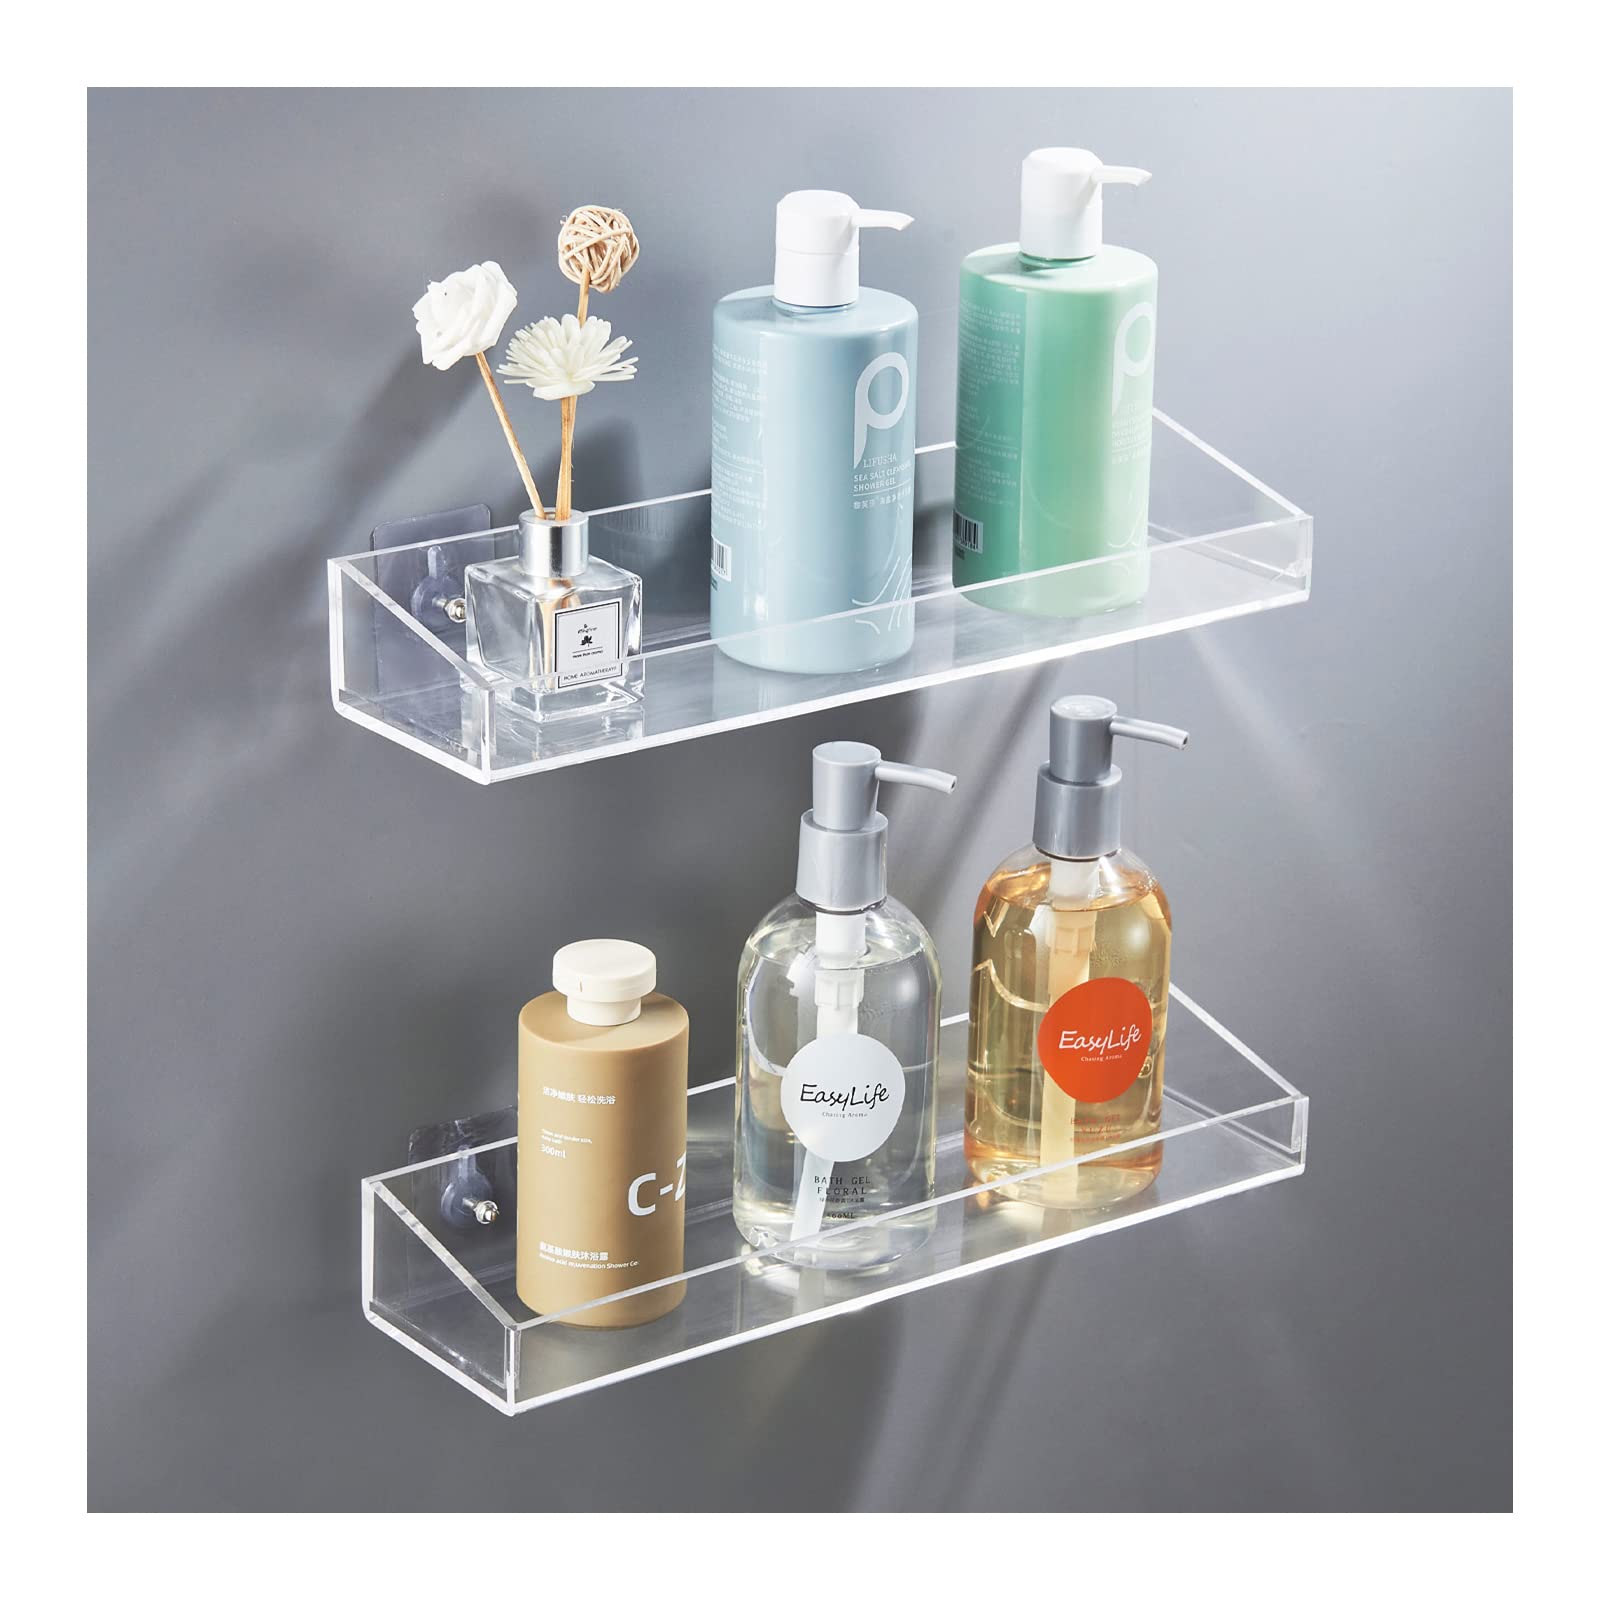 Navaris Acrylic Shower Shelves - Set of 2 - No Drilling Clear Bathroom Shelves - Self Adhesive Wall Mounted Transparent Shelf - 15x3.9x2.7 - 2